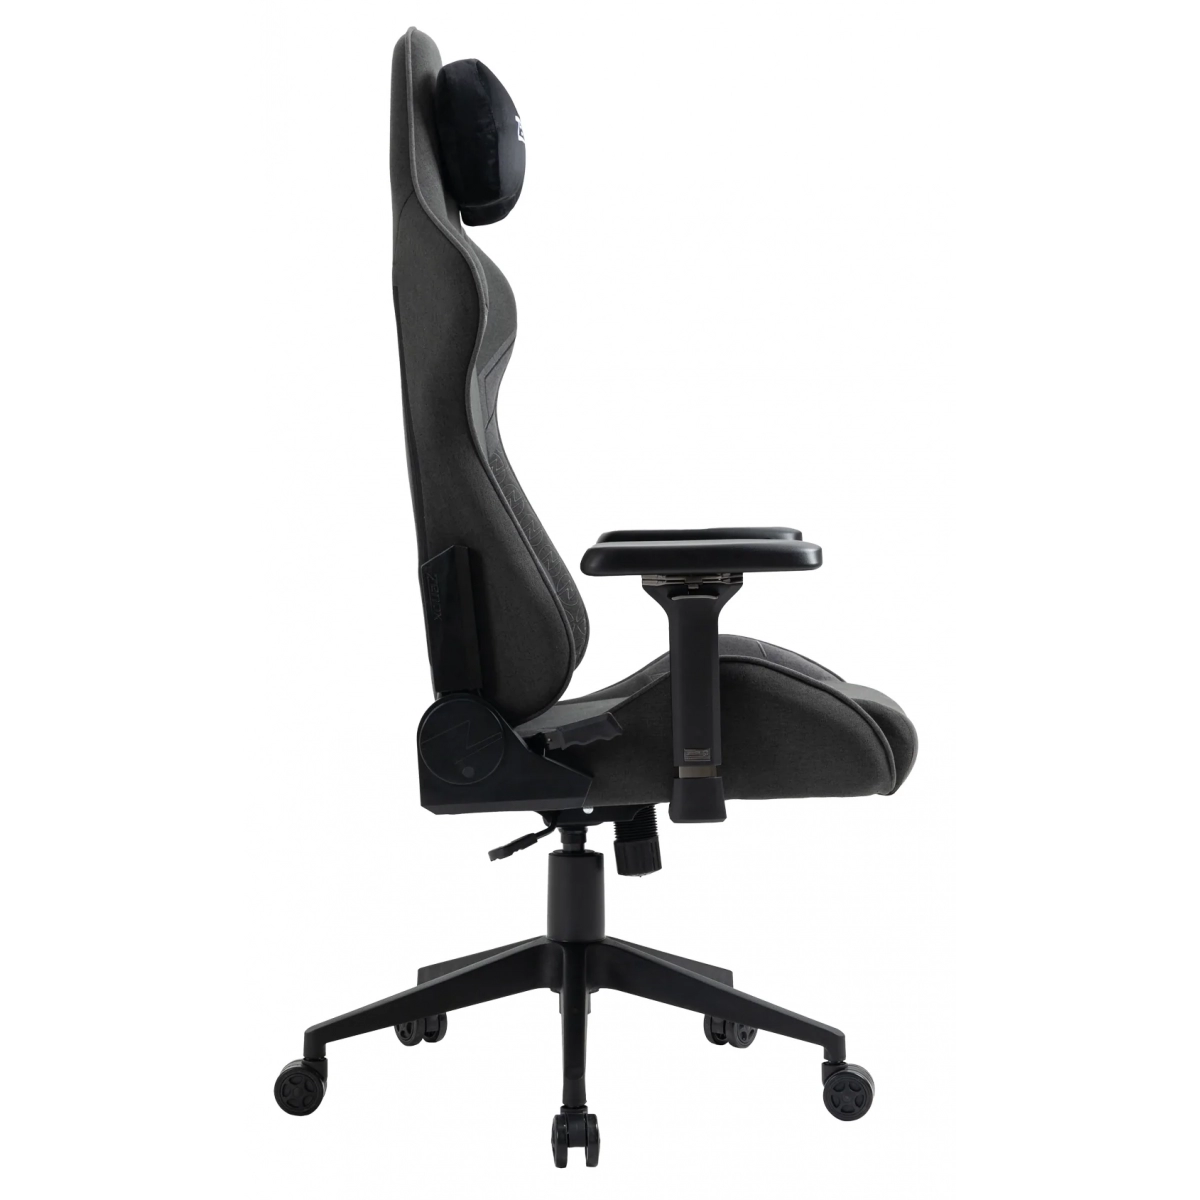 Zenox Saturn-MK2 Gaming Chair (Fabric/Charcoal)